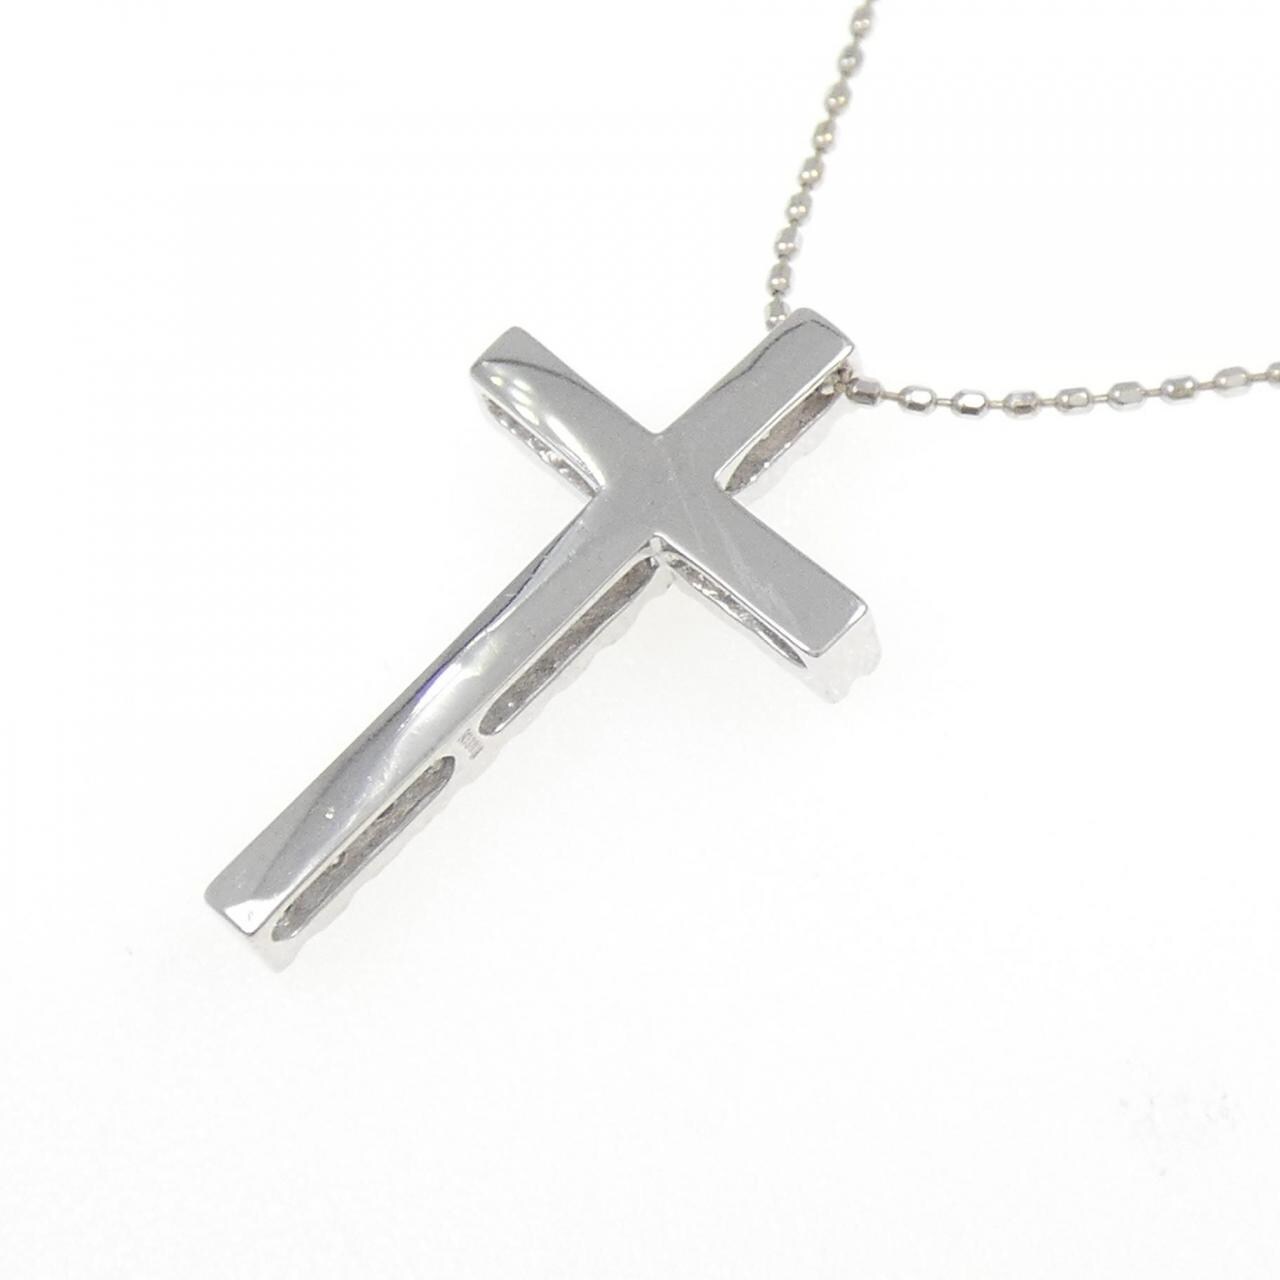 K18WG/750WG cross Diamond necklace 0.30CT